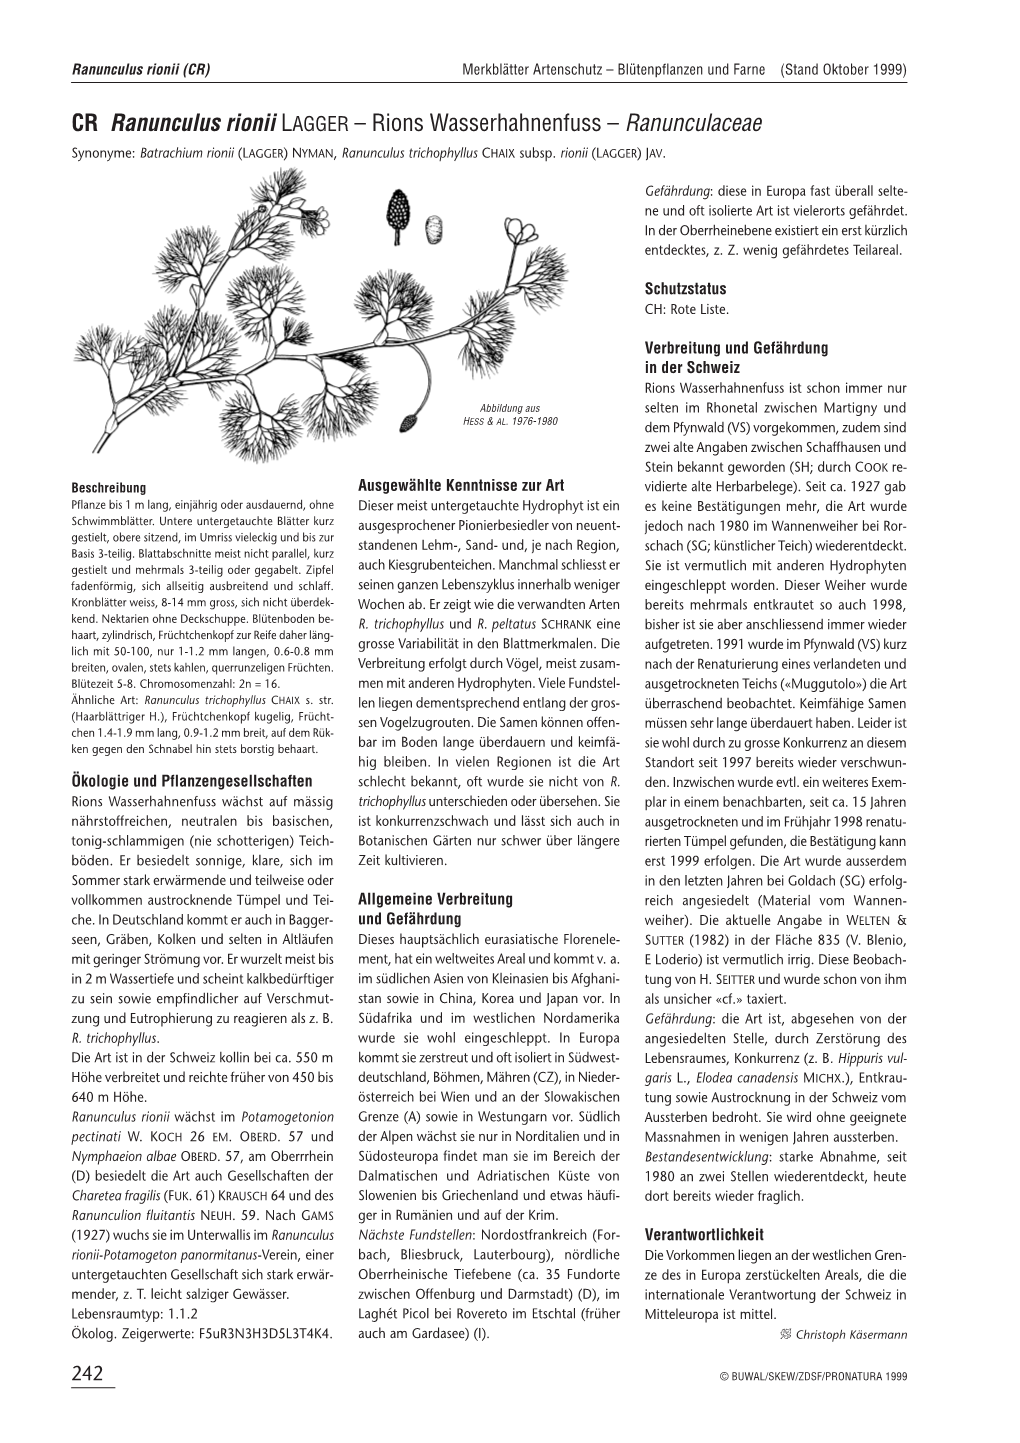 CR Ranunculus Rionii LAGGER – Rions Wasserhahnenfuss – Ranunculaceae